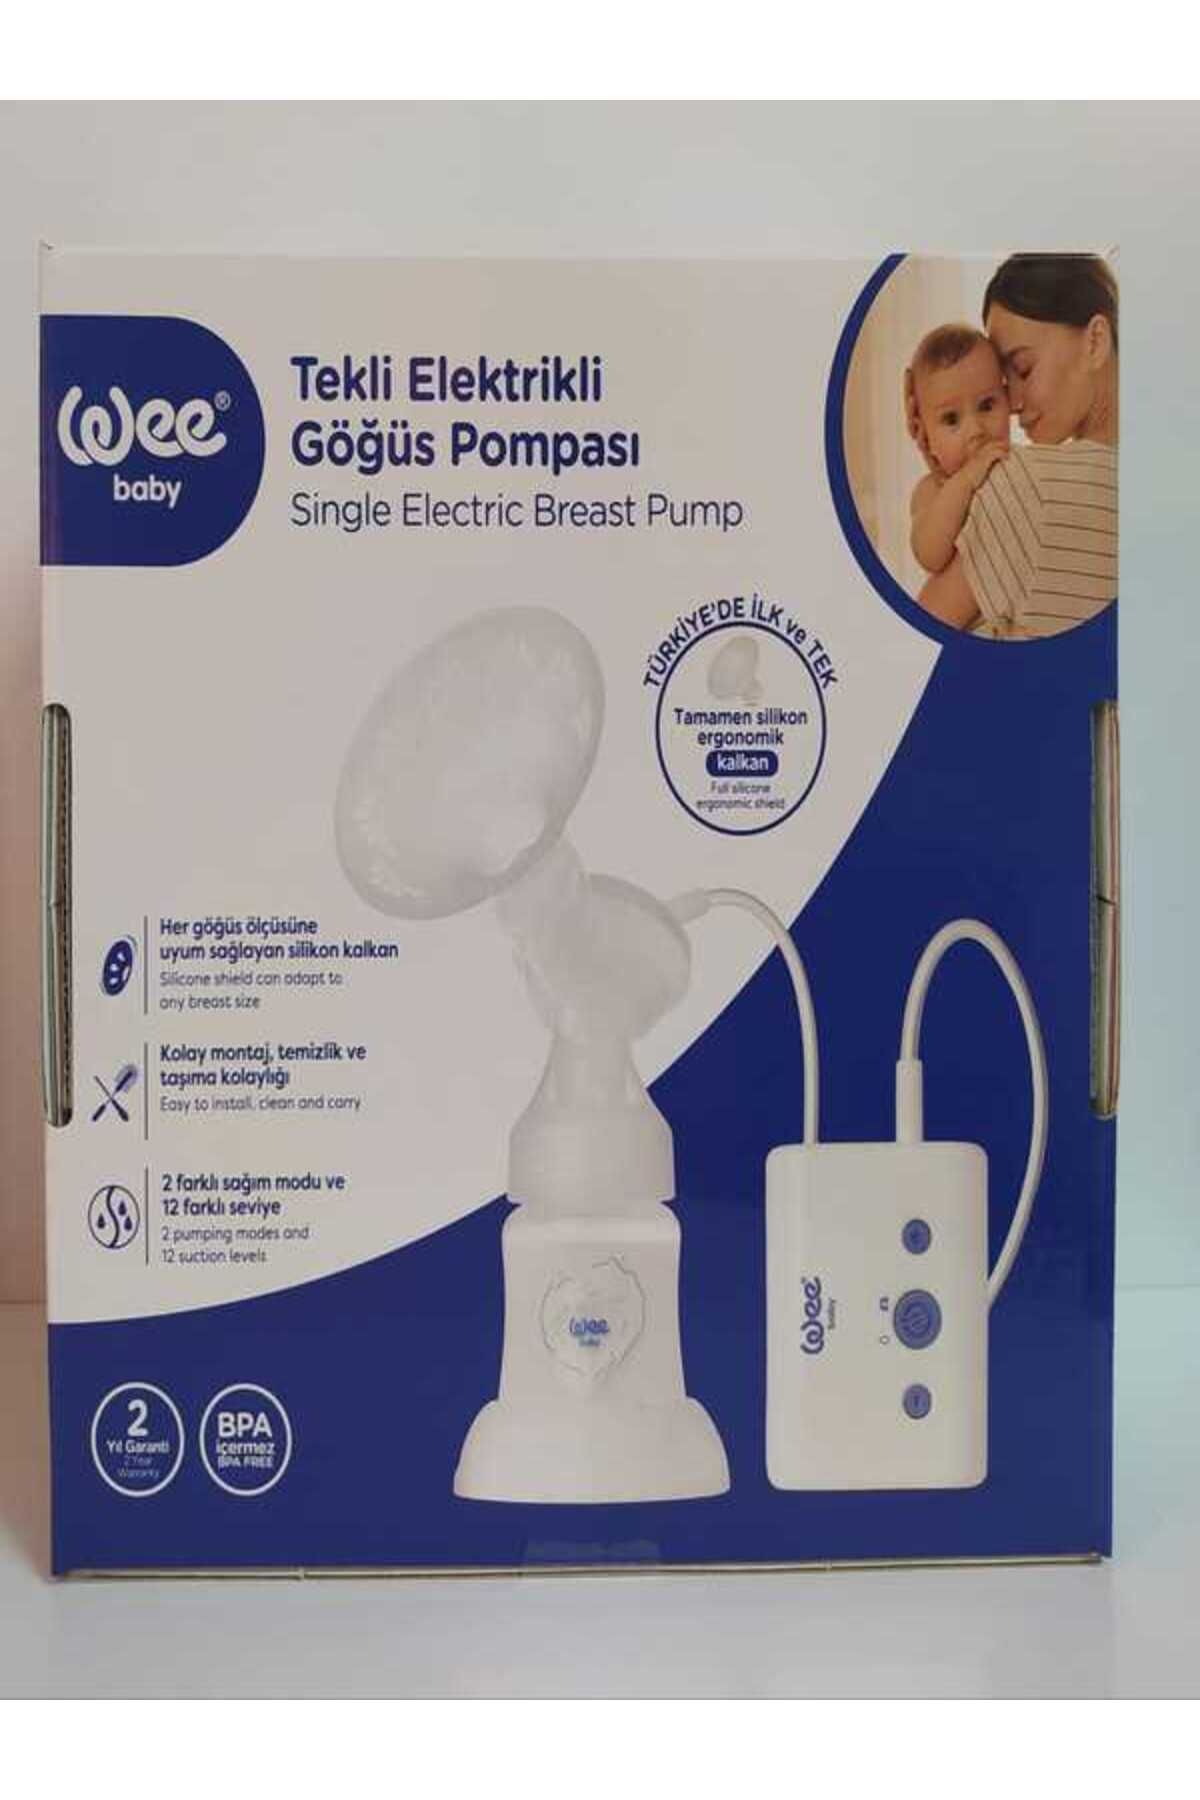 Wee Baby Elektirikli göğüs pompası